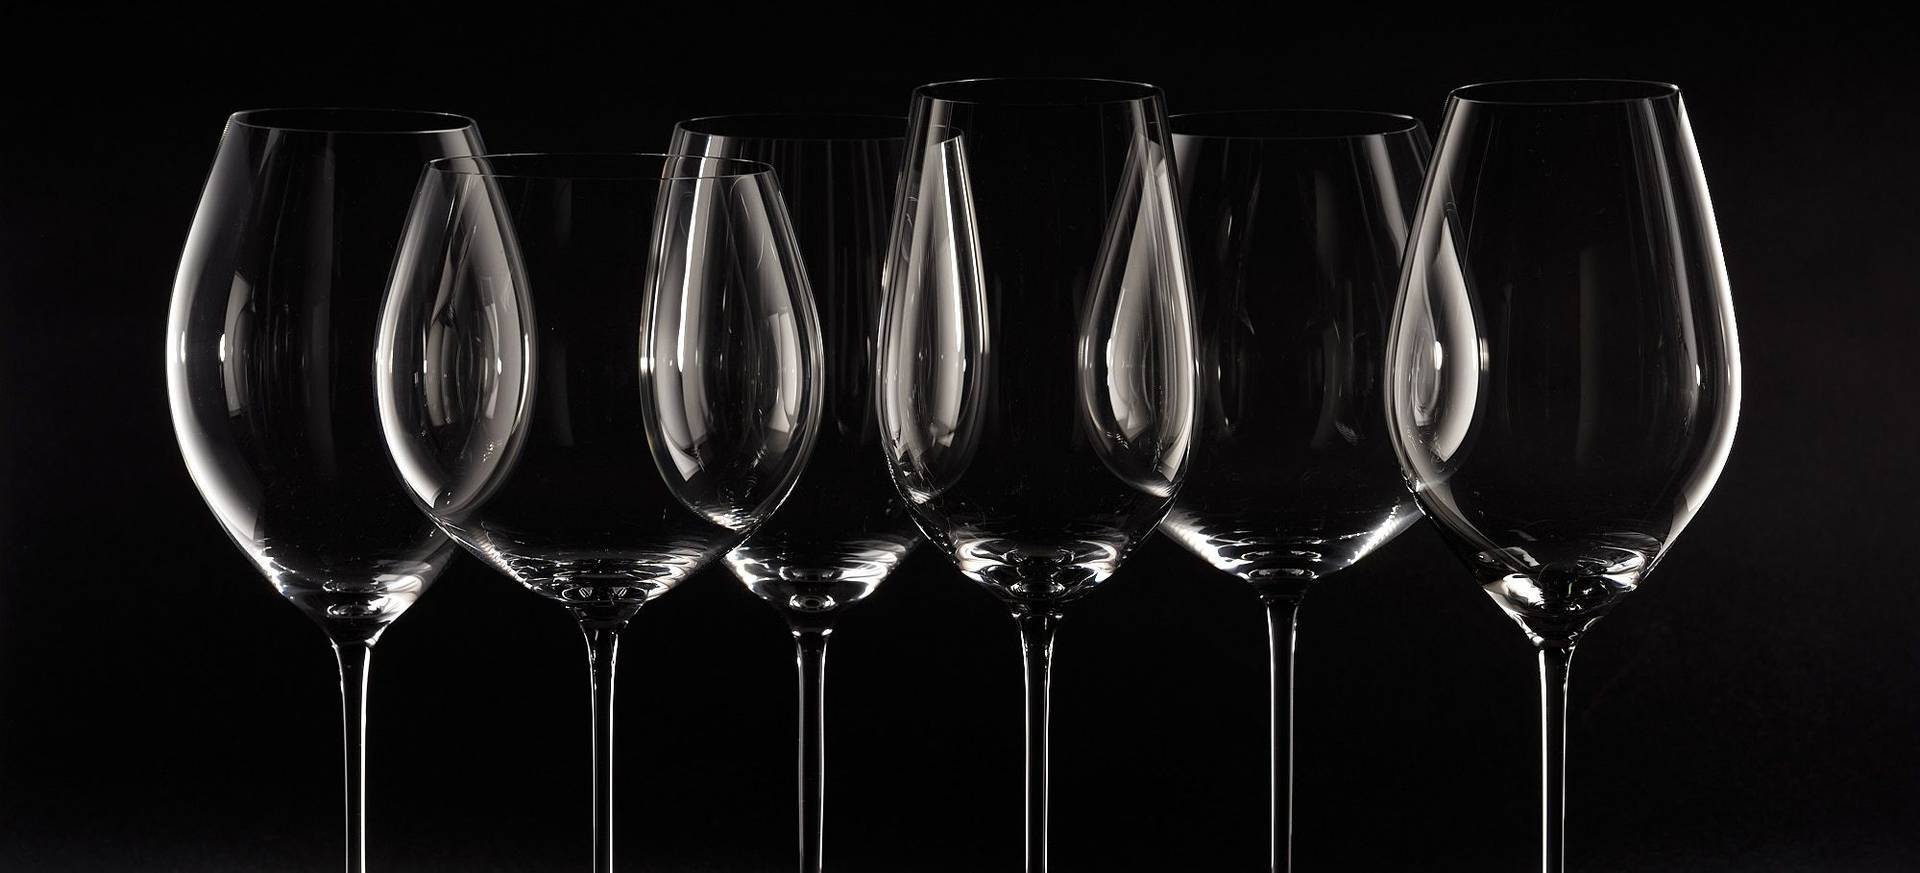 A wine glass guide – the Riedel Veritas line